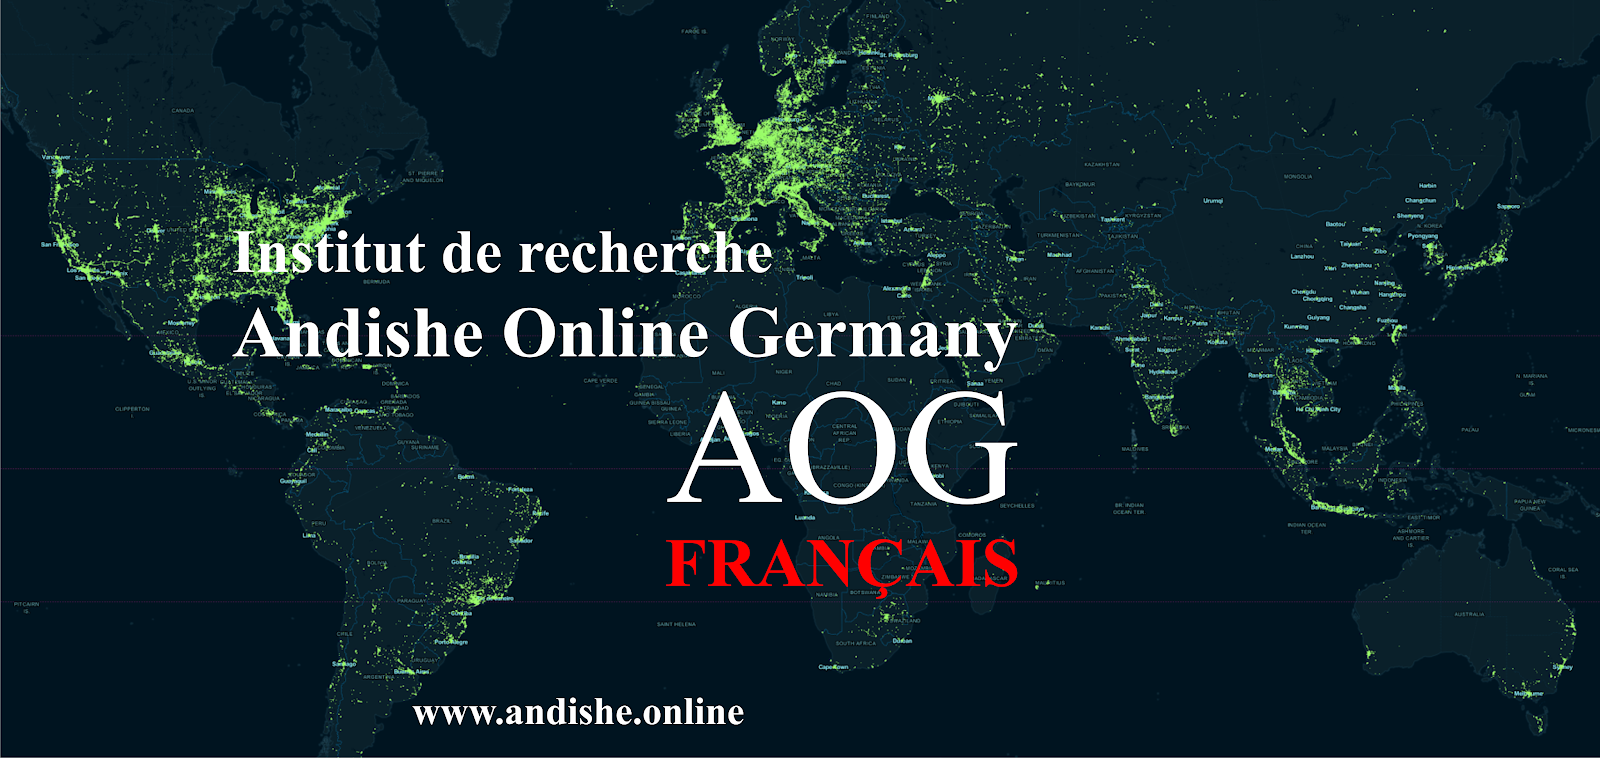     Andishe Online Germany (AOG)- Français